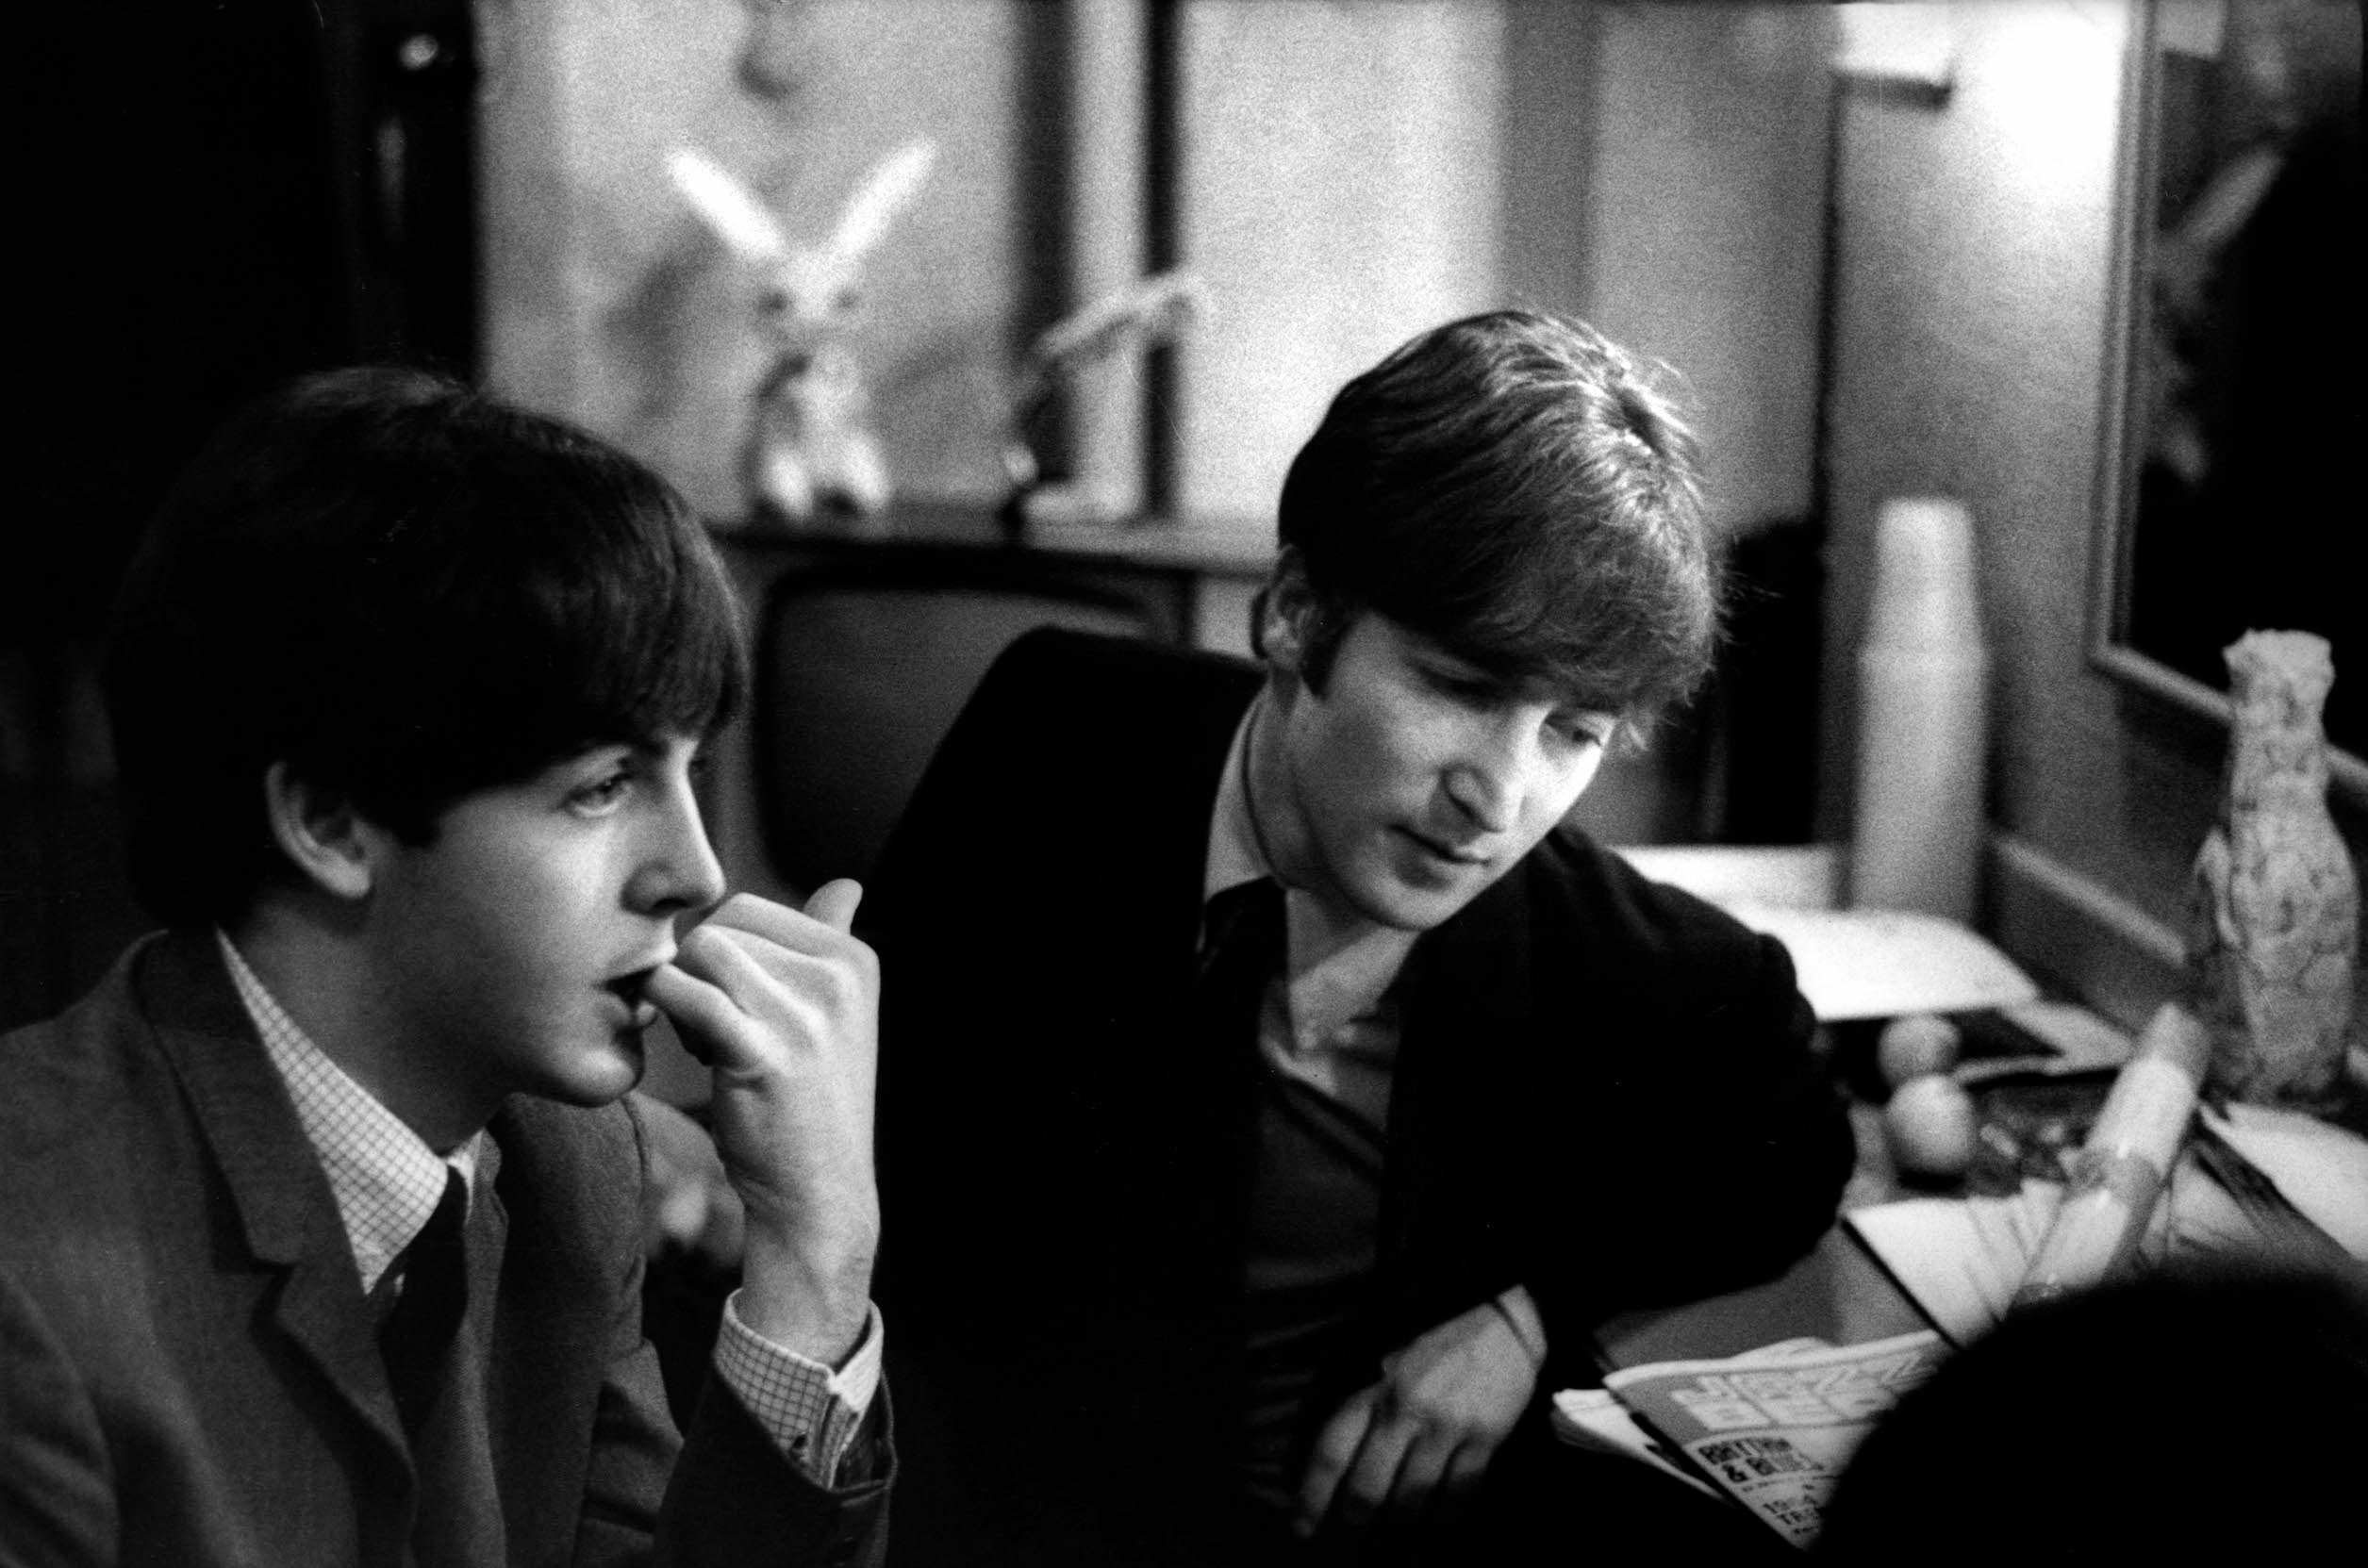 Paul McCartney and John Lennon of The Beatles backstage at the Finnsbury Park Astoria in London, England